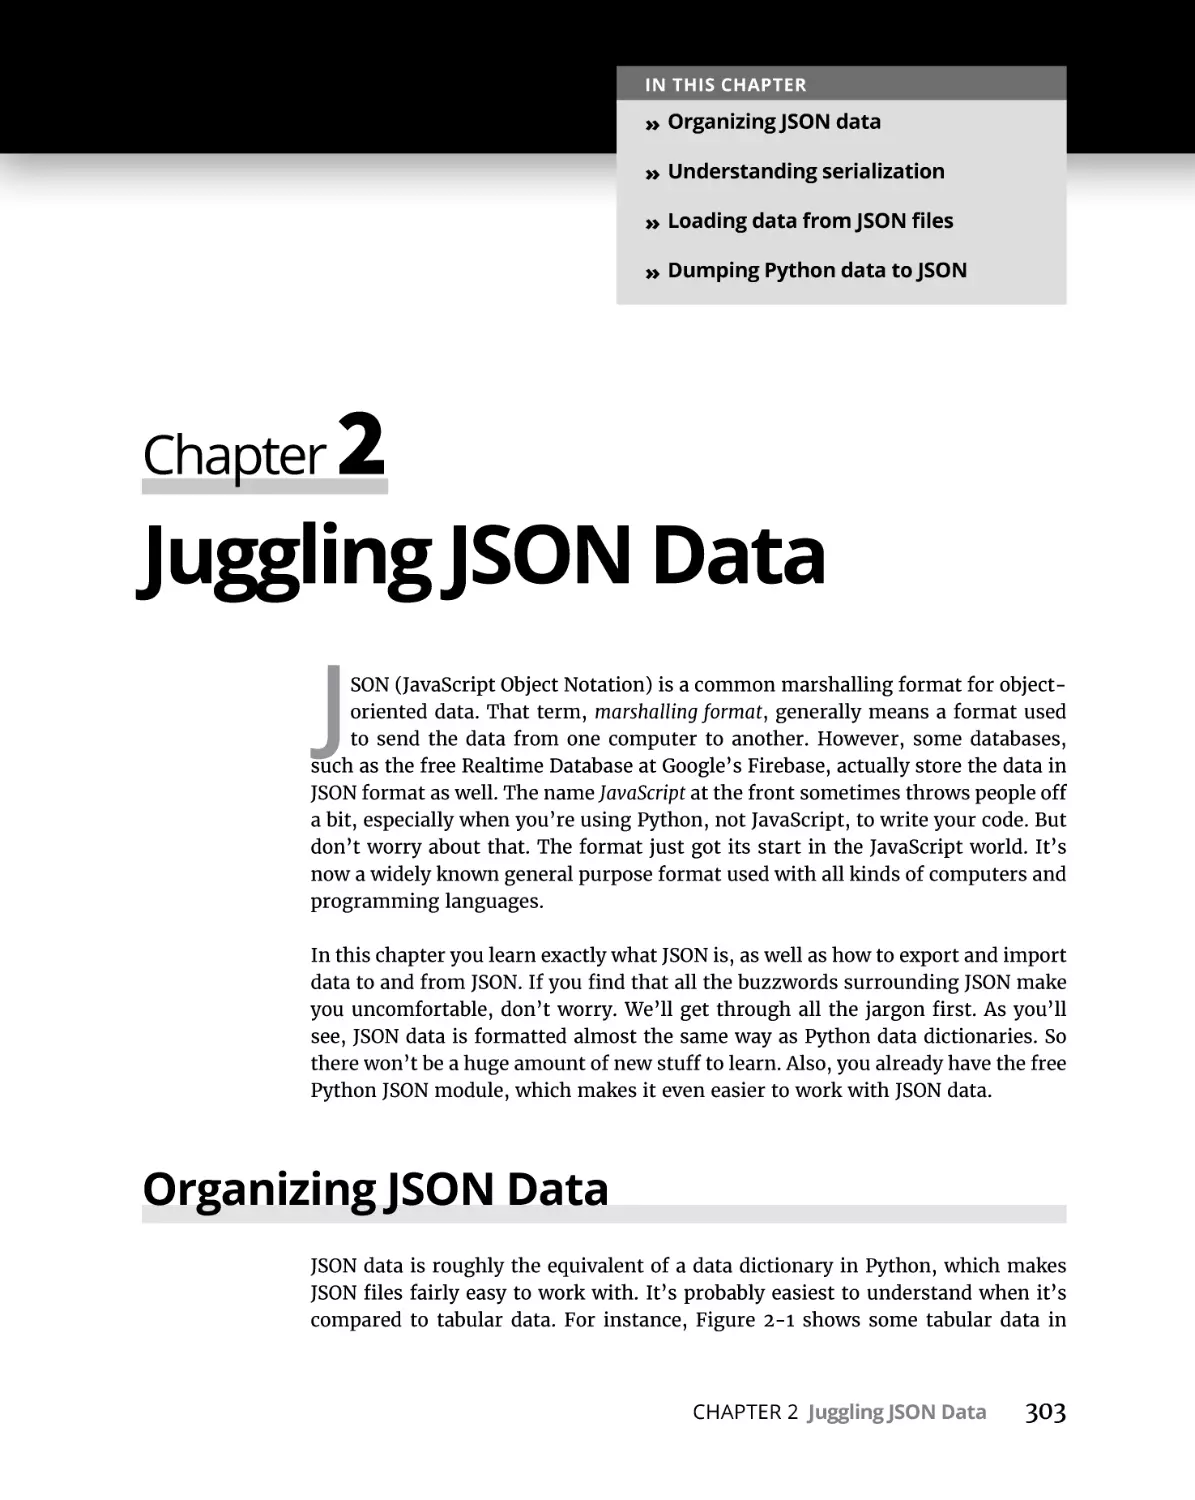 Chapter 2 Juggling JSON Data
Organizing JSON Data